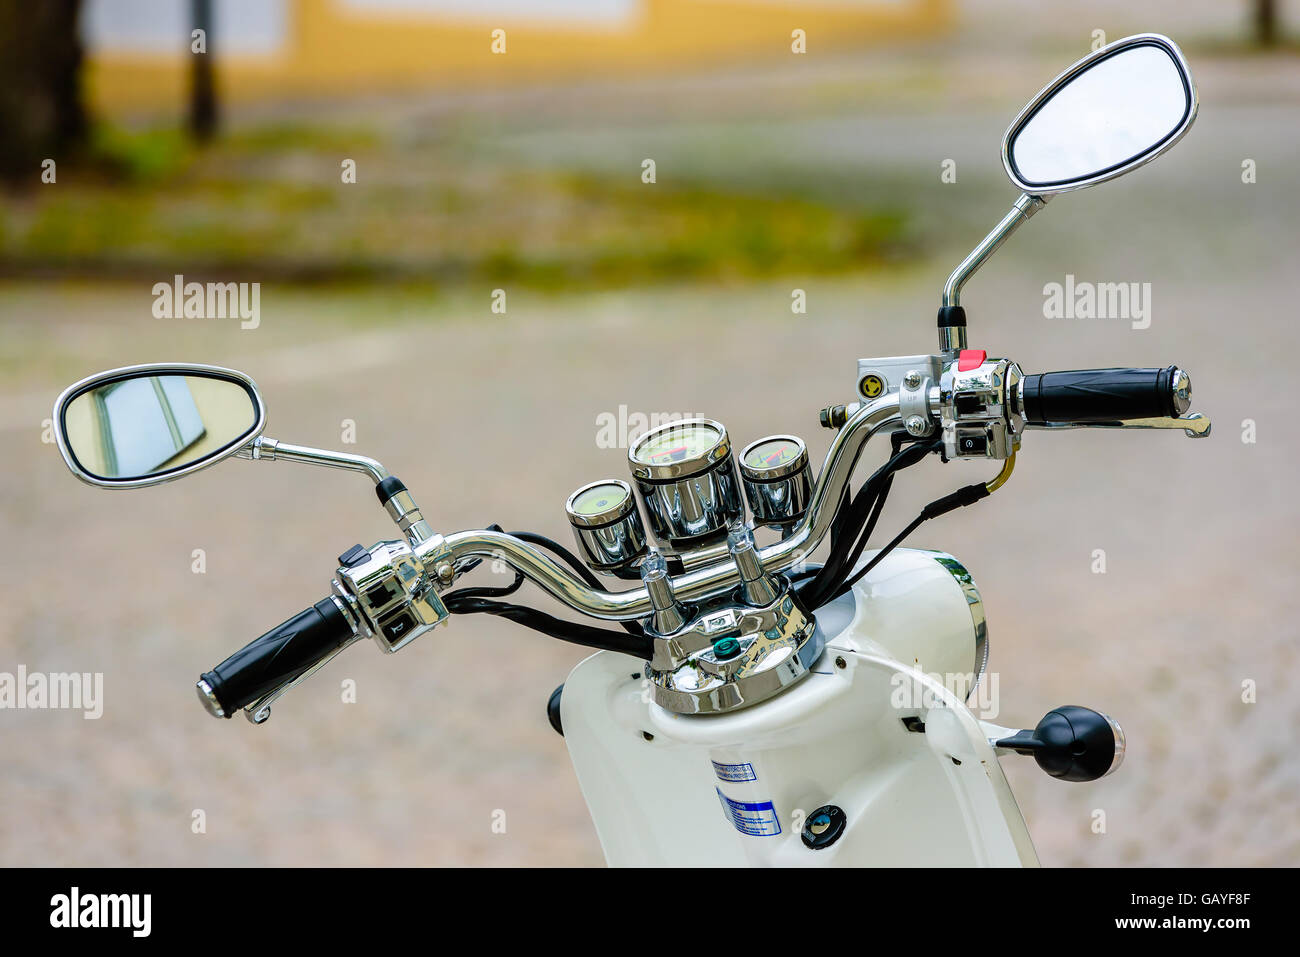 Motala, Schweden - 21. Juni 2016: Baotian Retro-2013 Moped-Lenker. Fenster  in einem Spiegel sichtbar Stockfotografie - Alamy